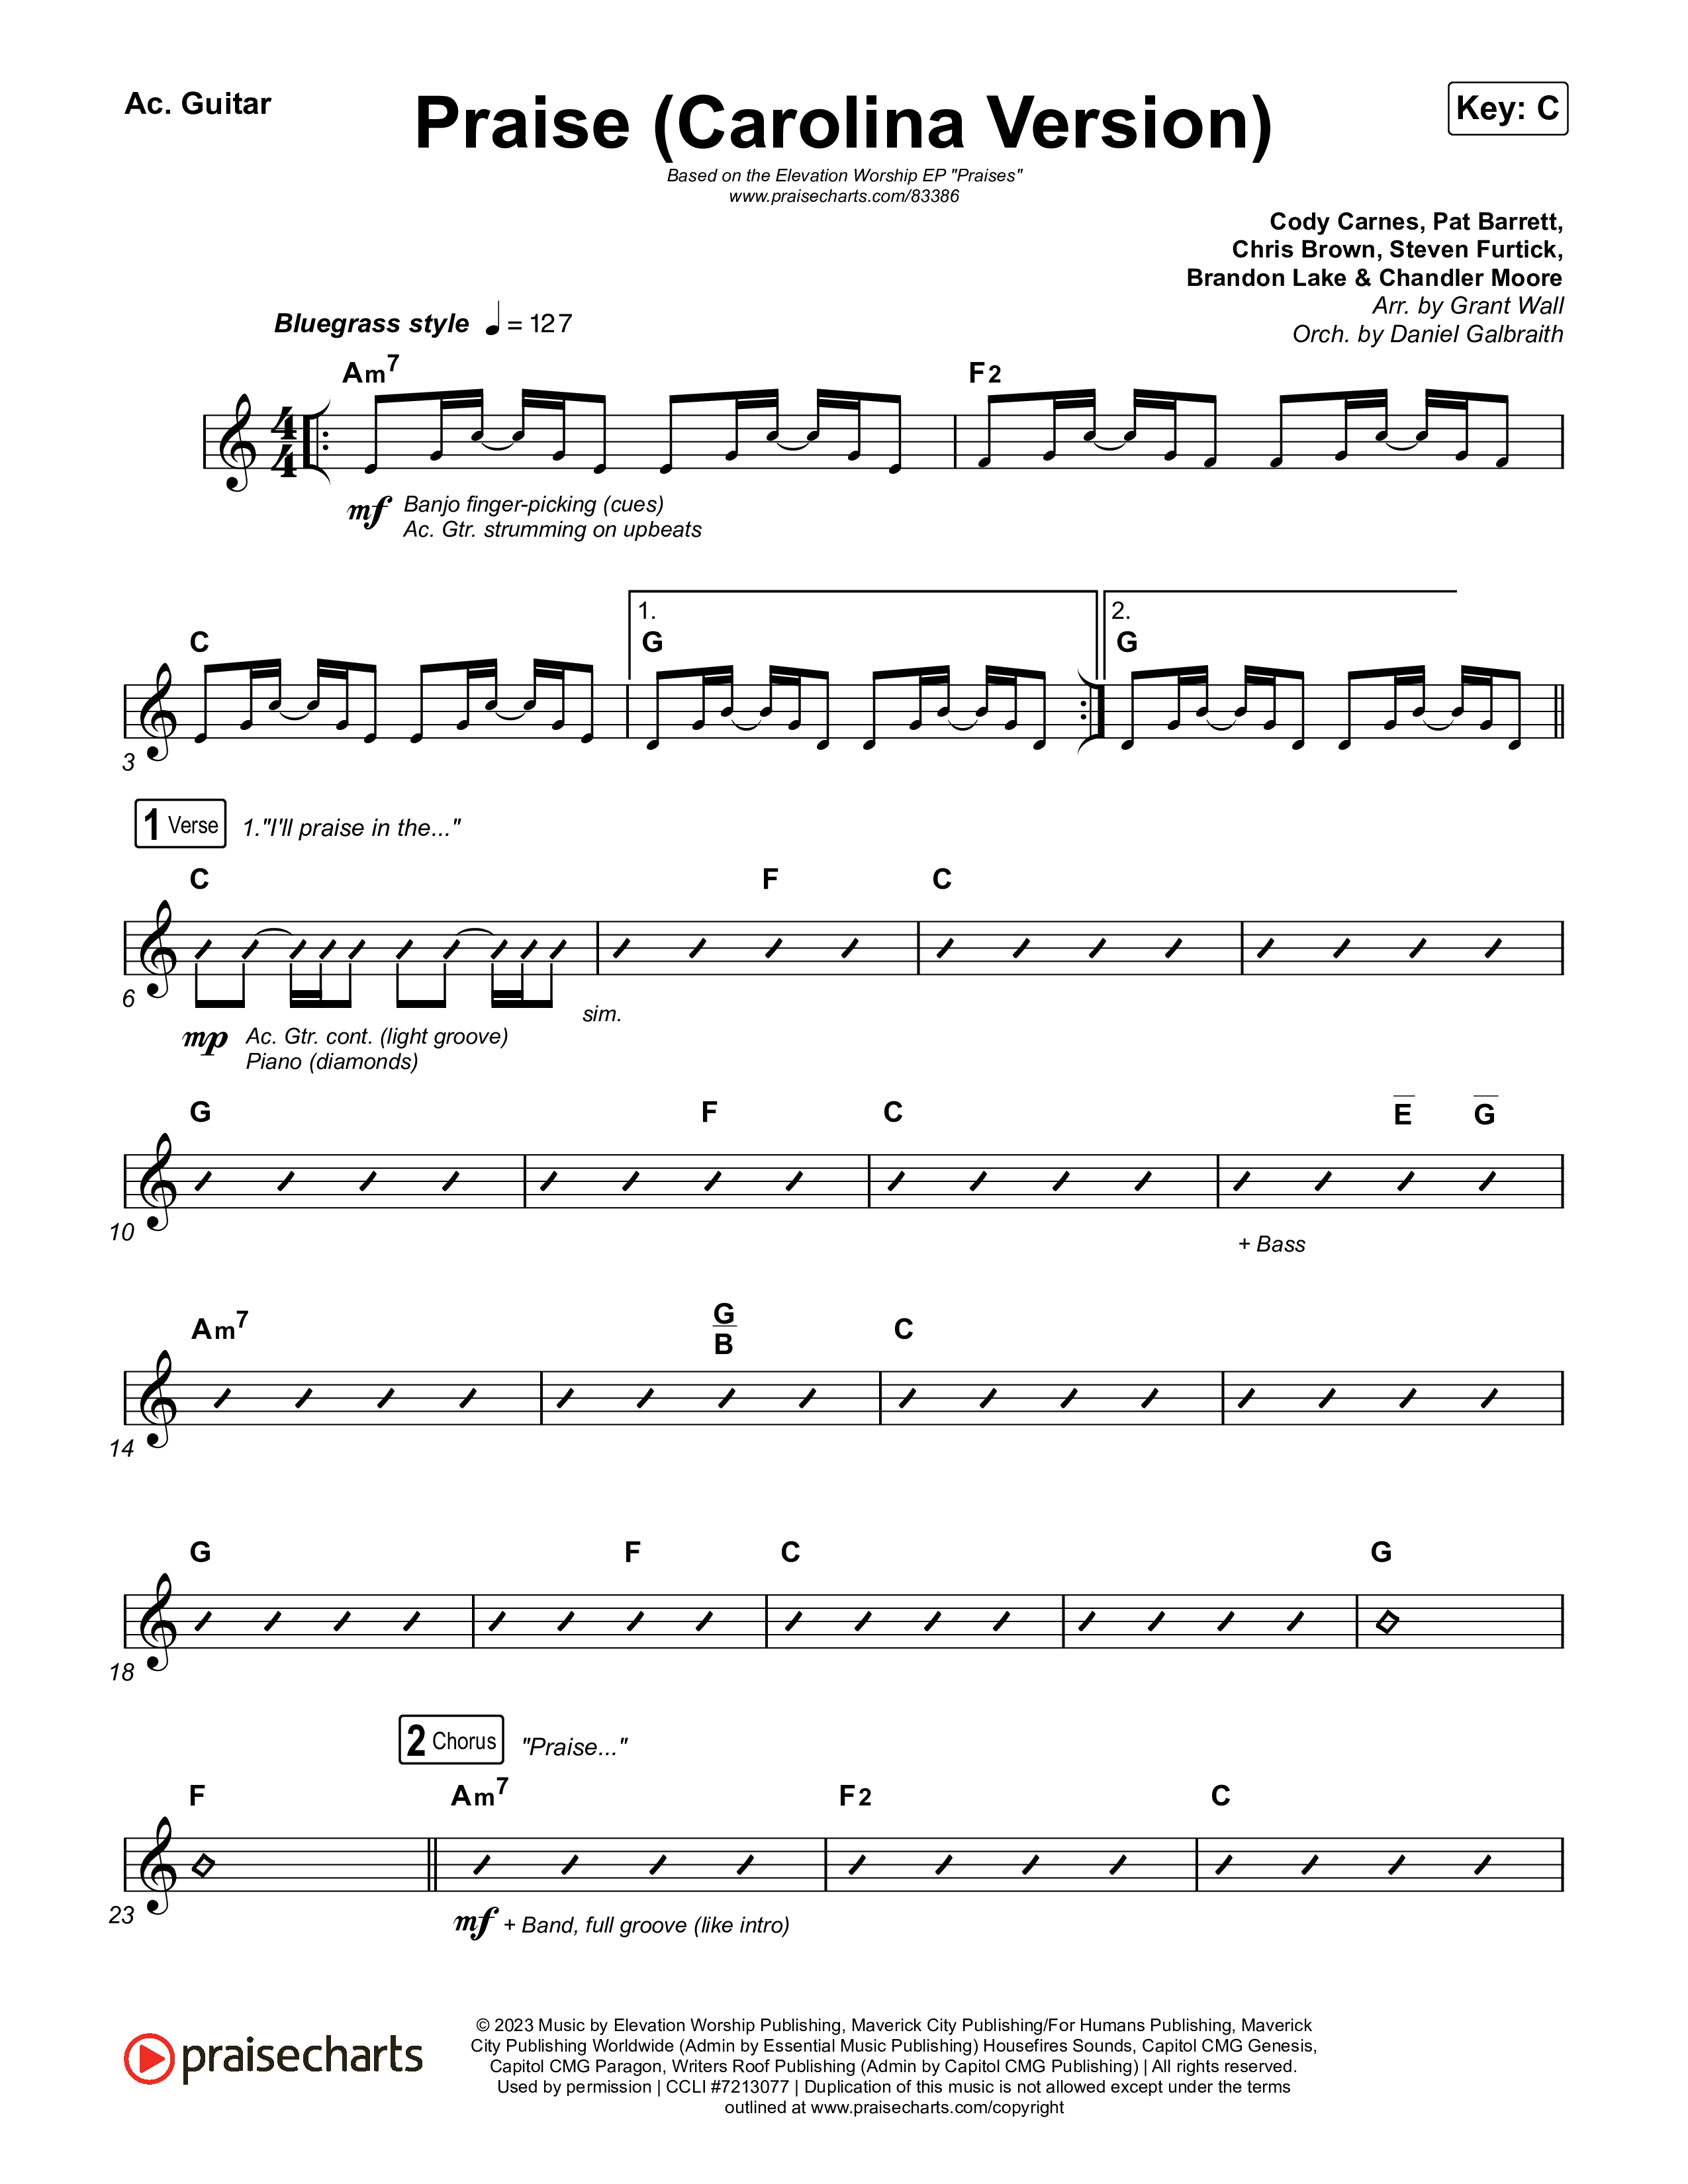 Praise (Carolina Version) Acoustic Guitar (Elevation Worship)